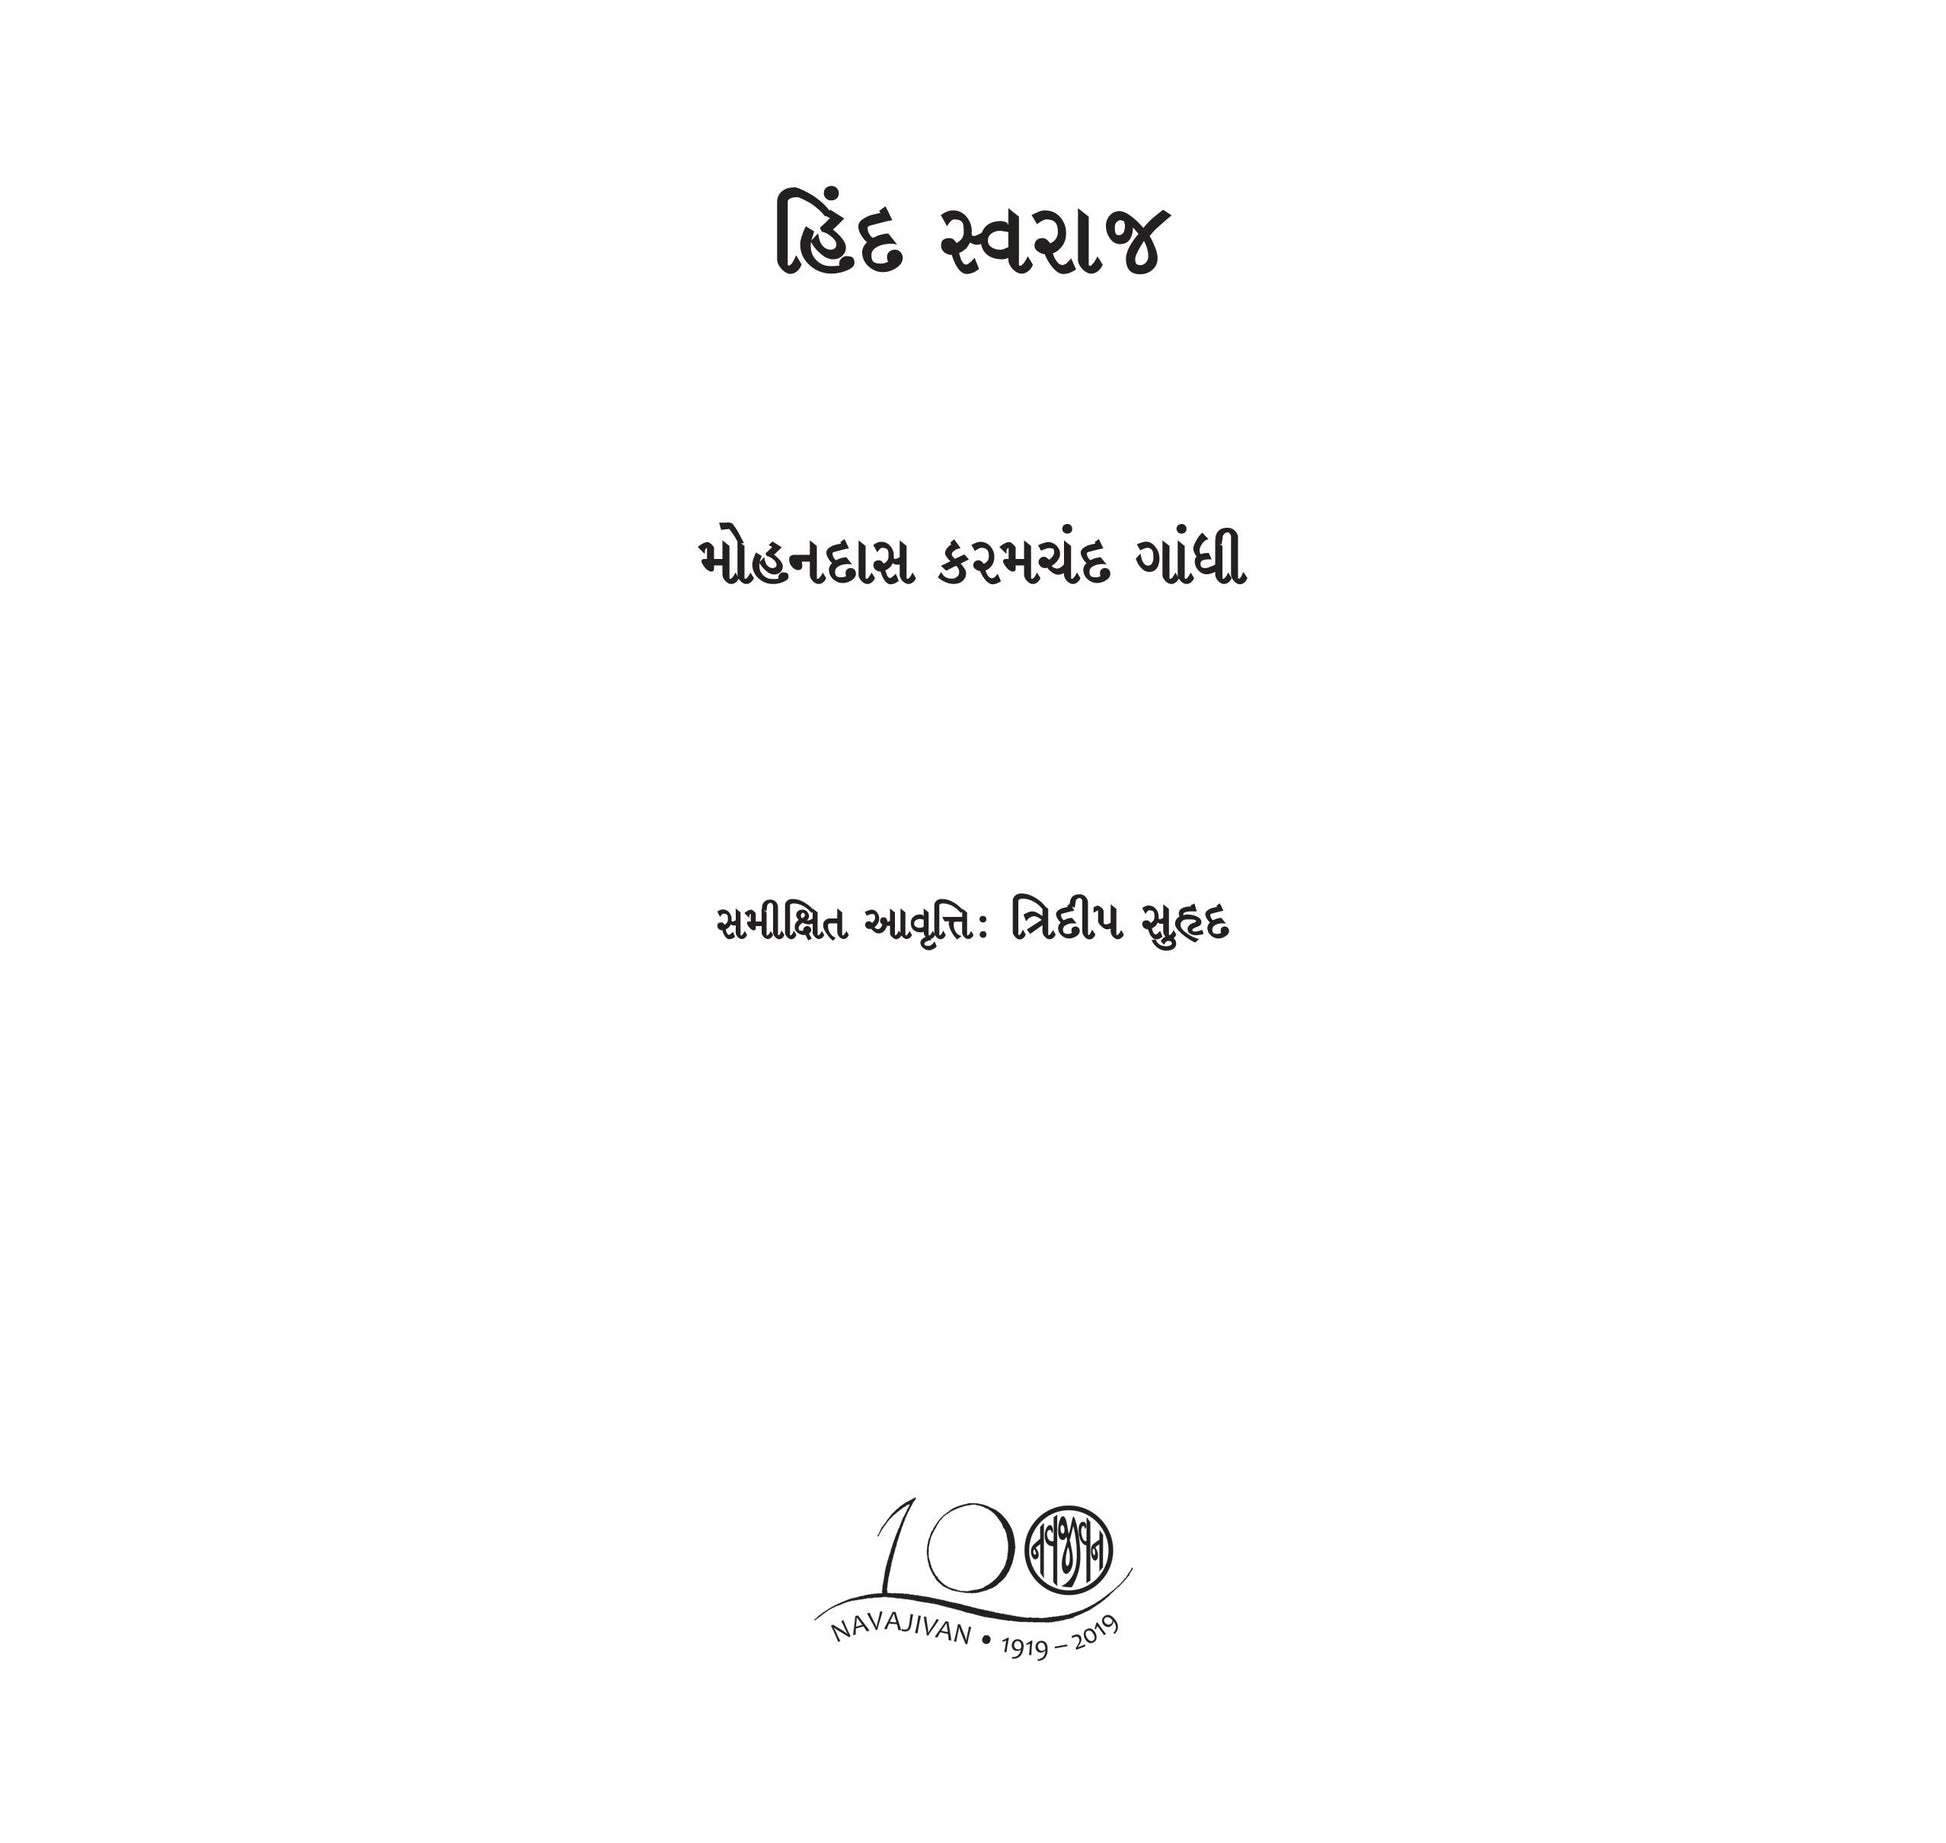 Hind Swaraj (Critical Edition) (હિંદ સ્વરાજ (સમીક્ષિત આવૃત્તિ))